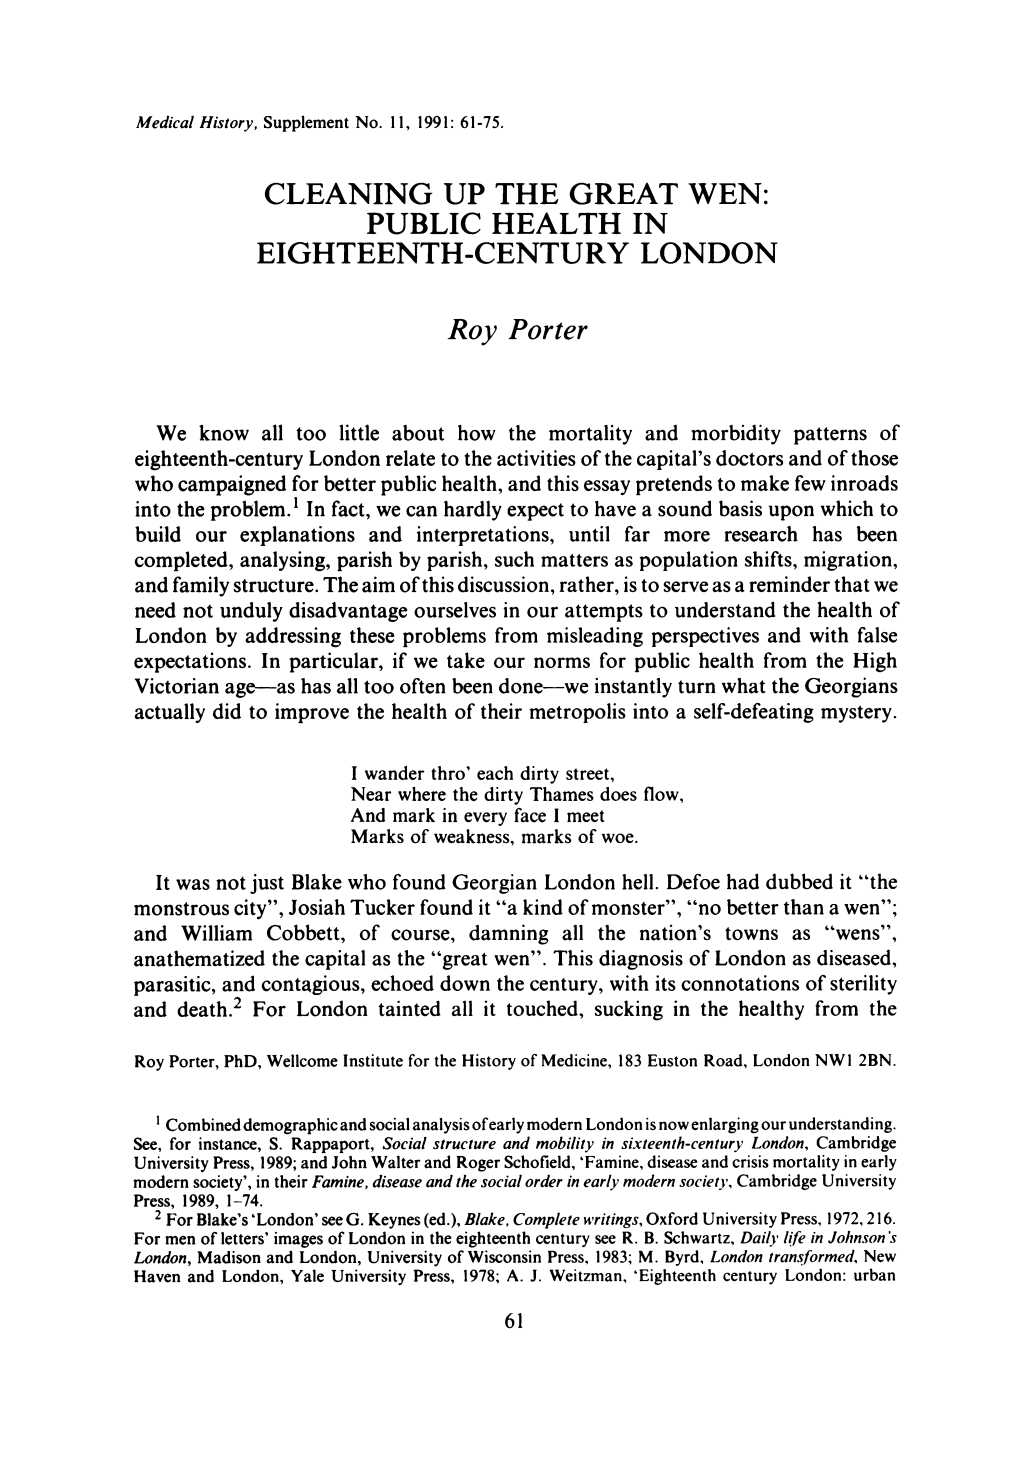 Public Health in Eighteenth-Century London